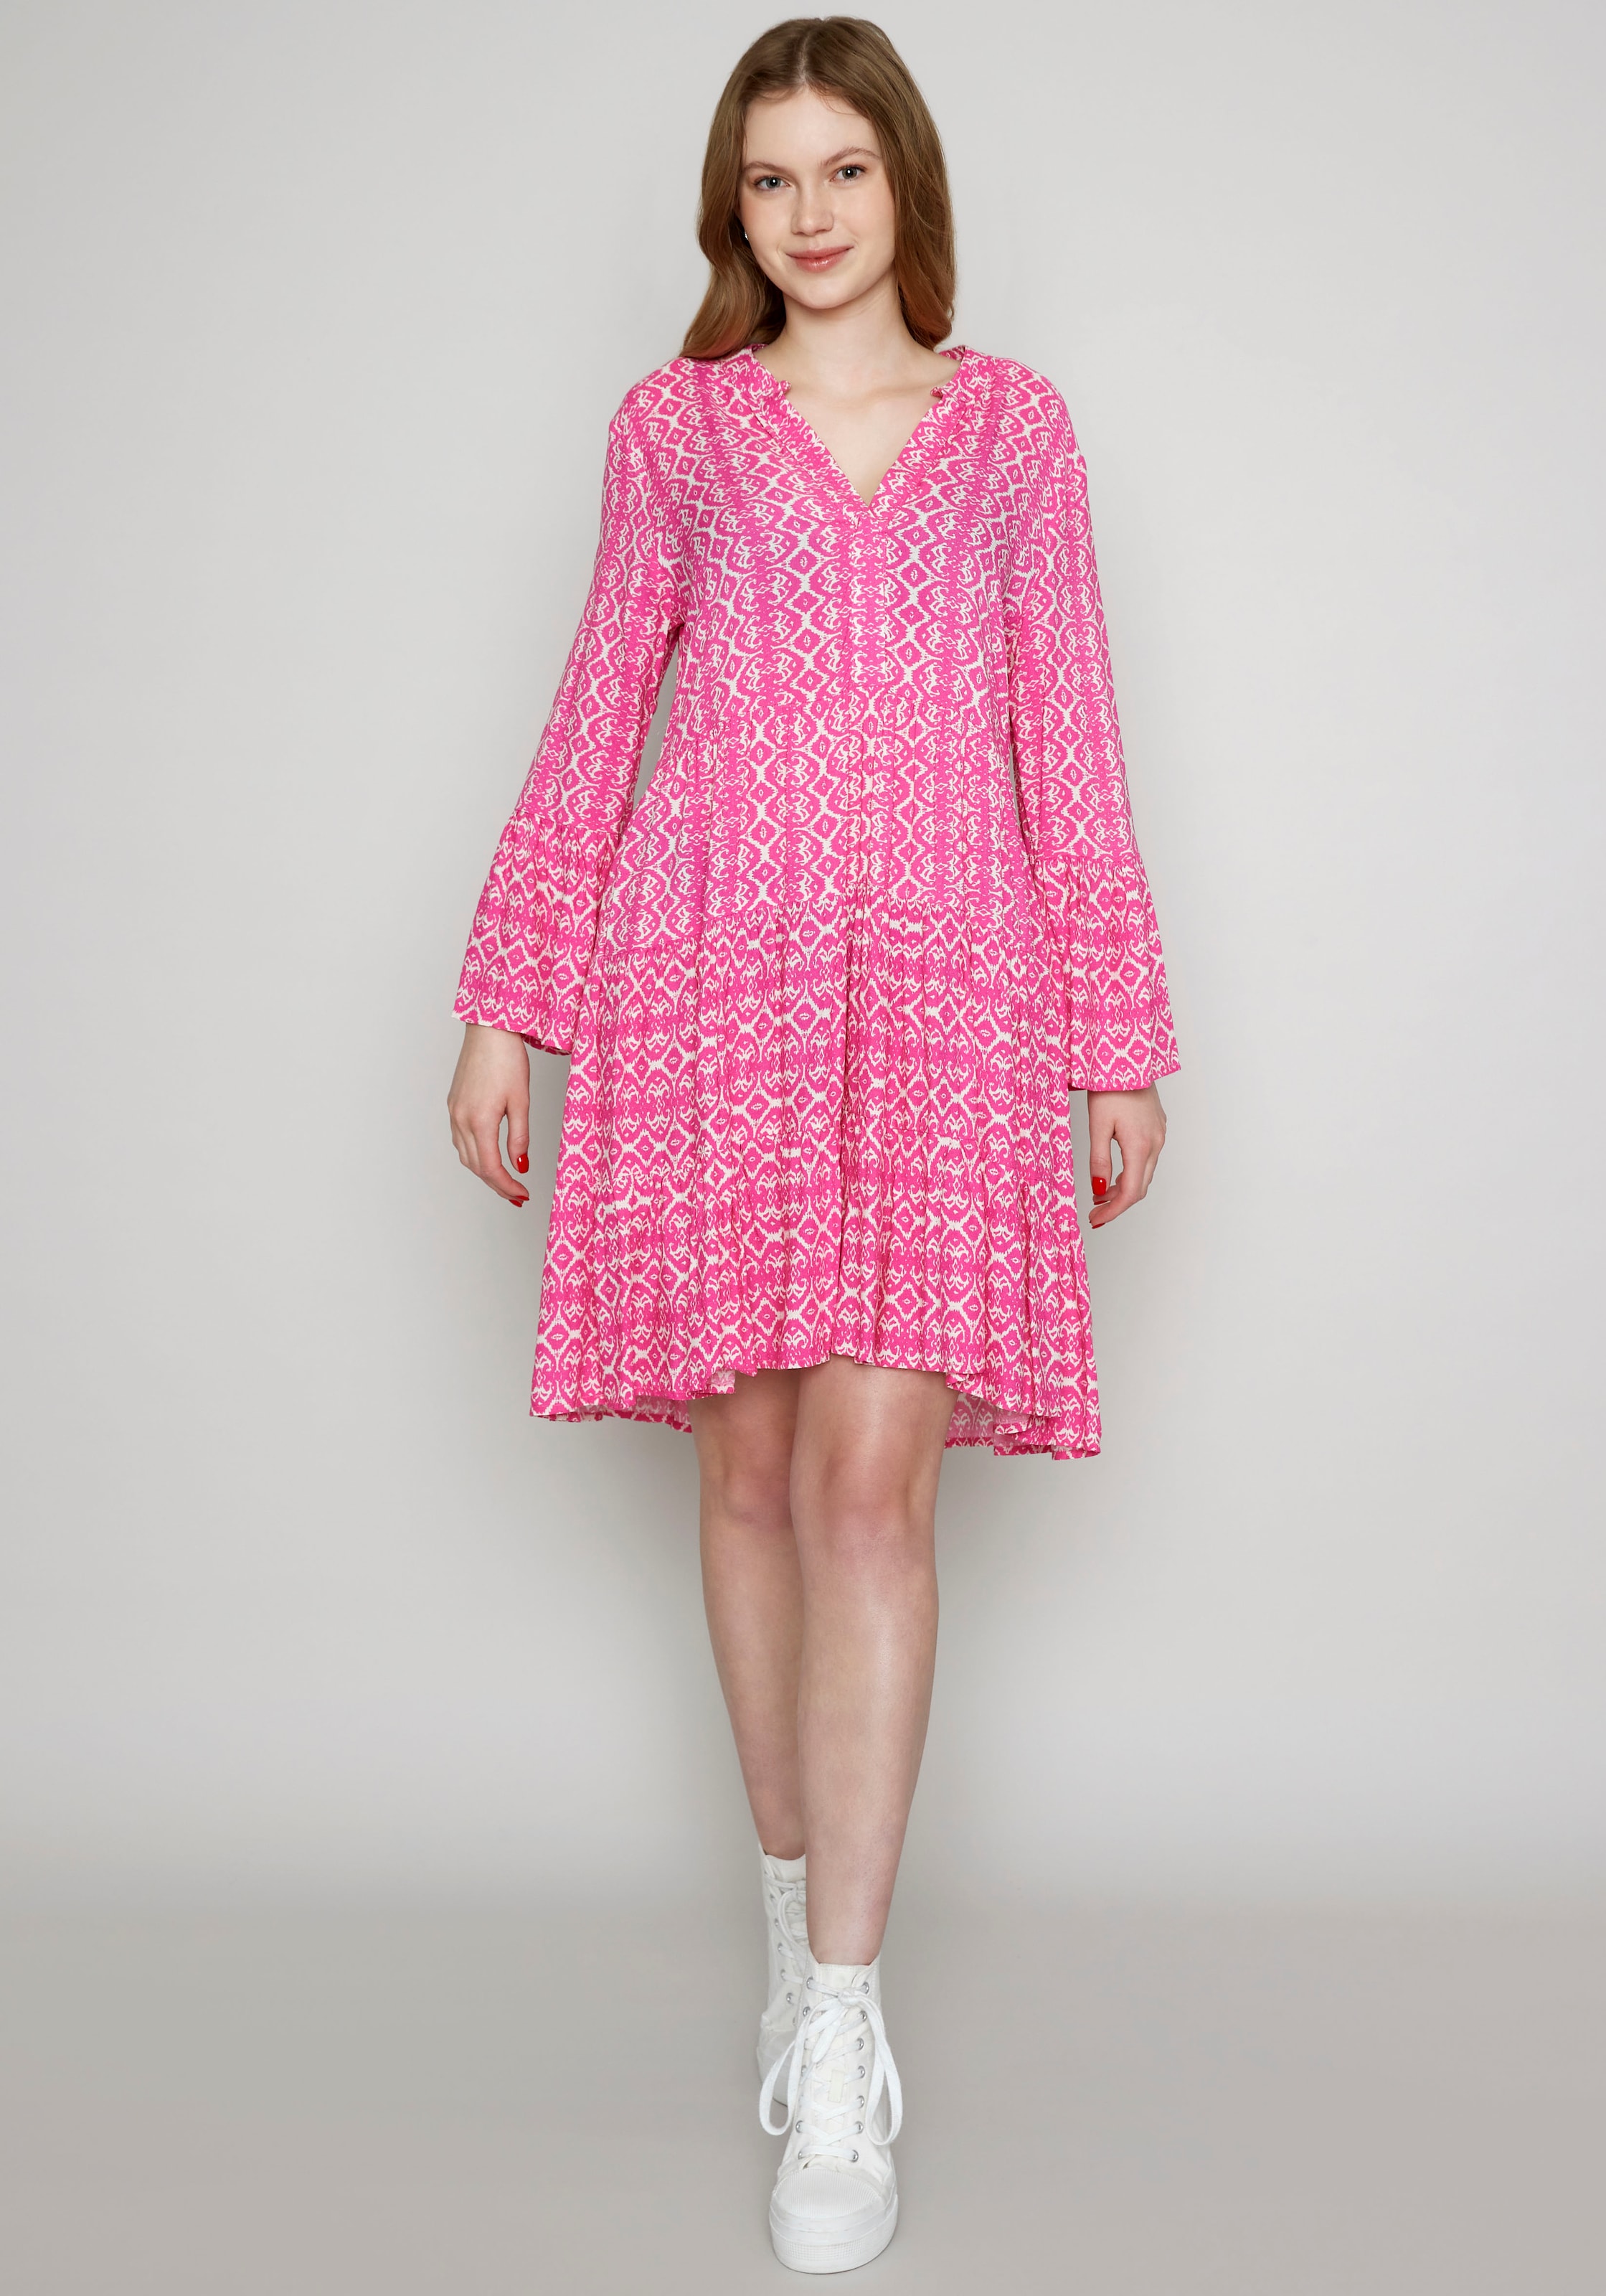 ZABAIONE Sommerkleid »Dress Me44lika«, mit Volant im Tunika Style kaufen